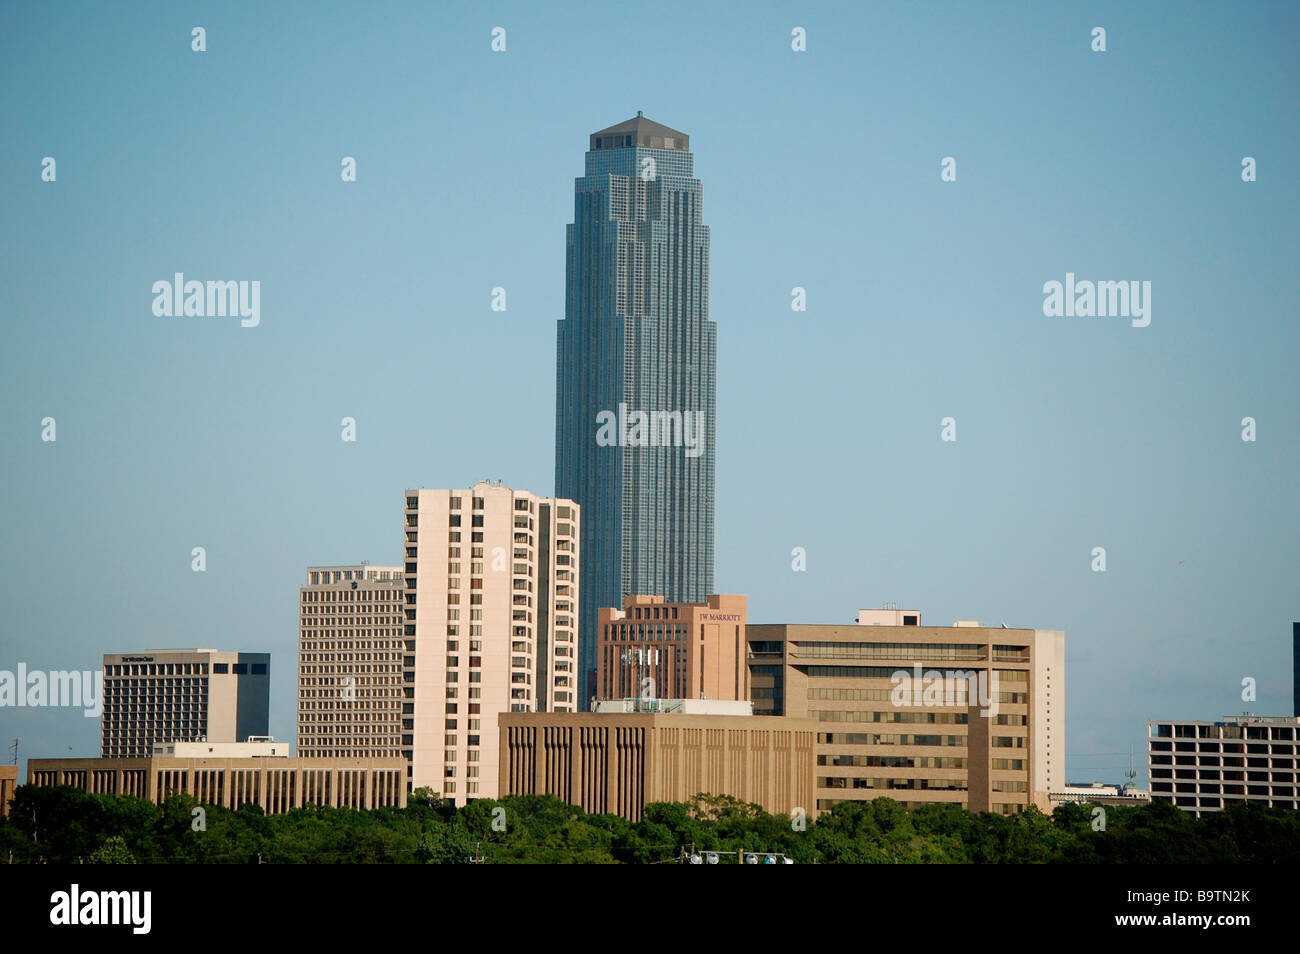 The Galleria Mall in Houston, Texas Editorial Stock Photo - Image of  market, luxury: 150289498